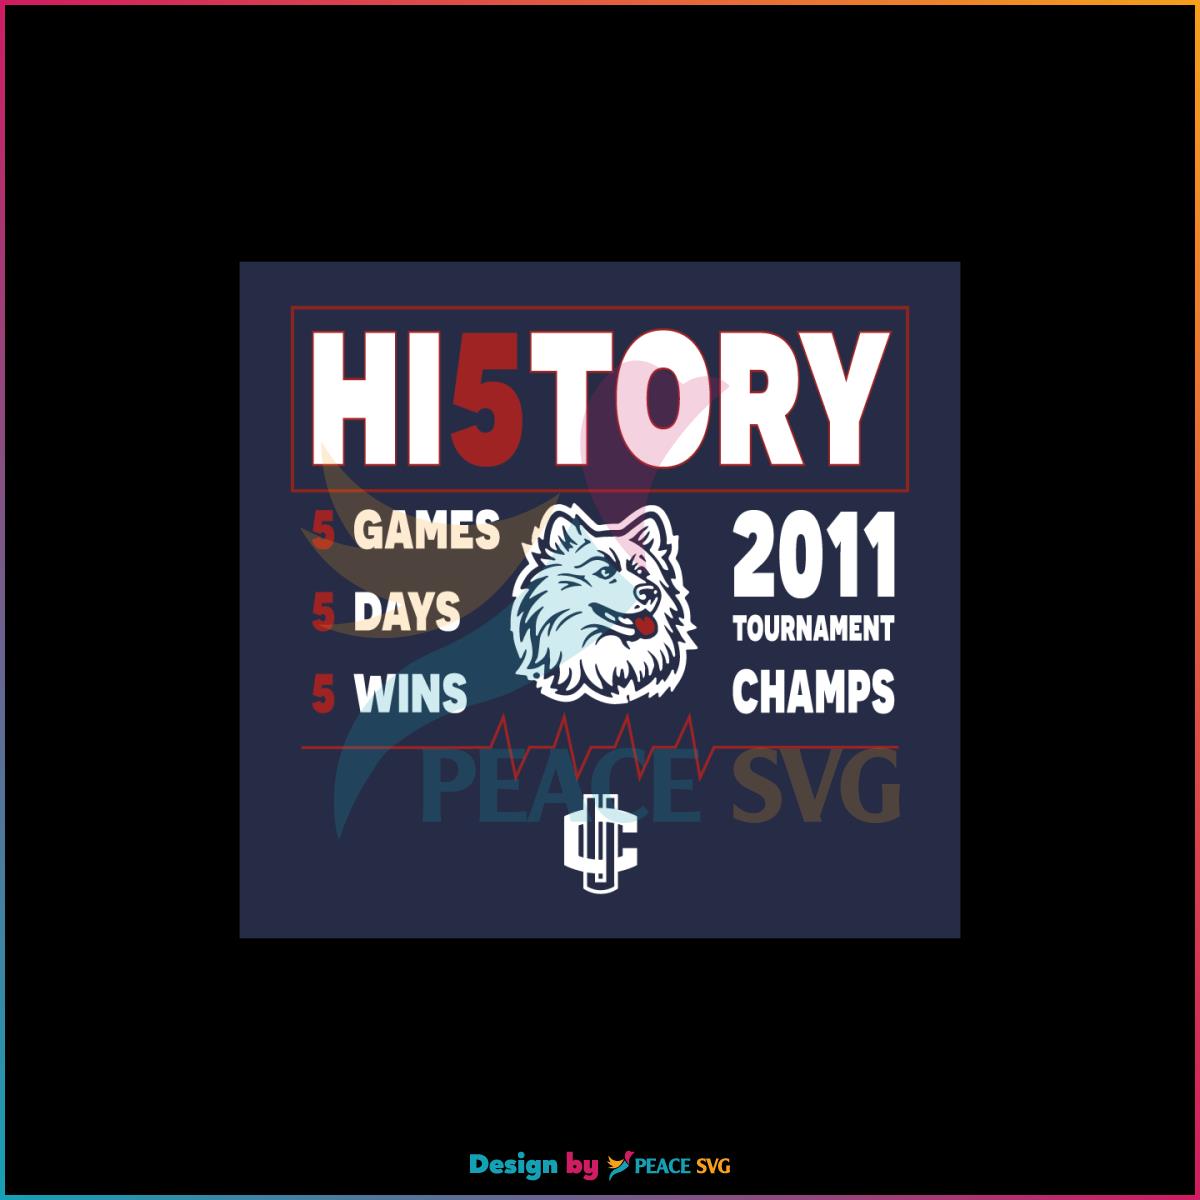 Uconn Hi5tory 2011 Tournament Champs Svg Cutting Files